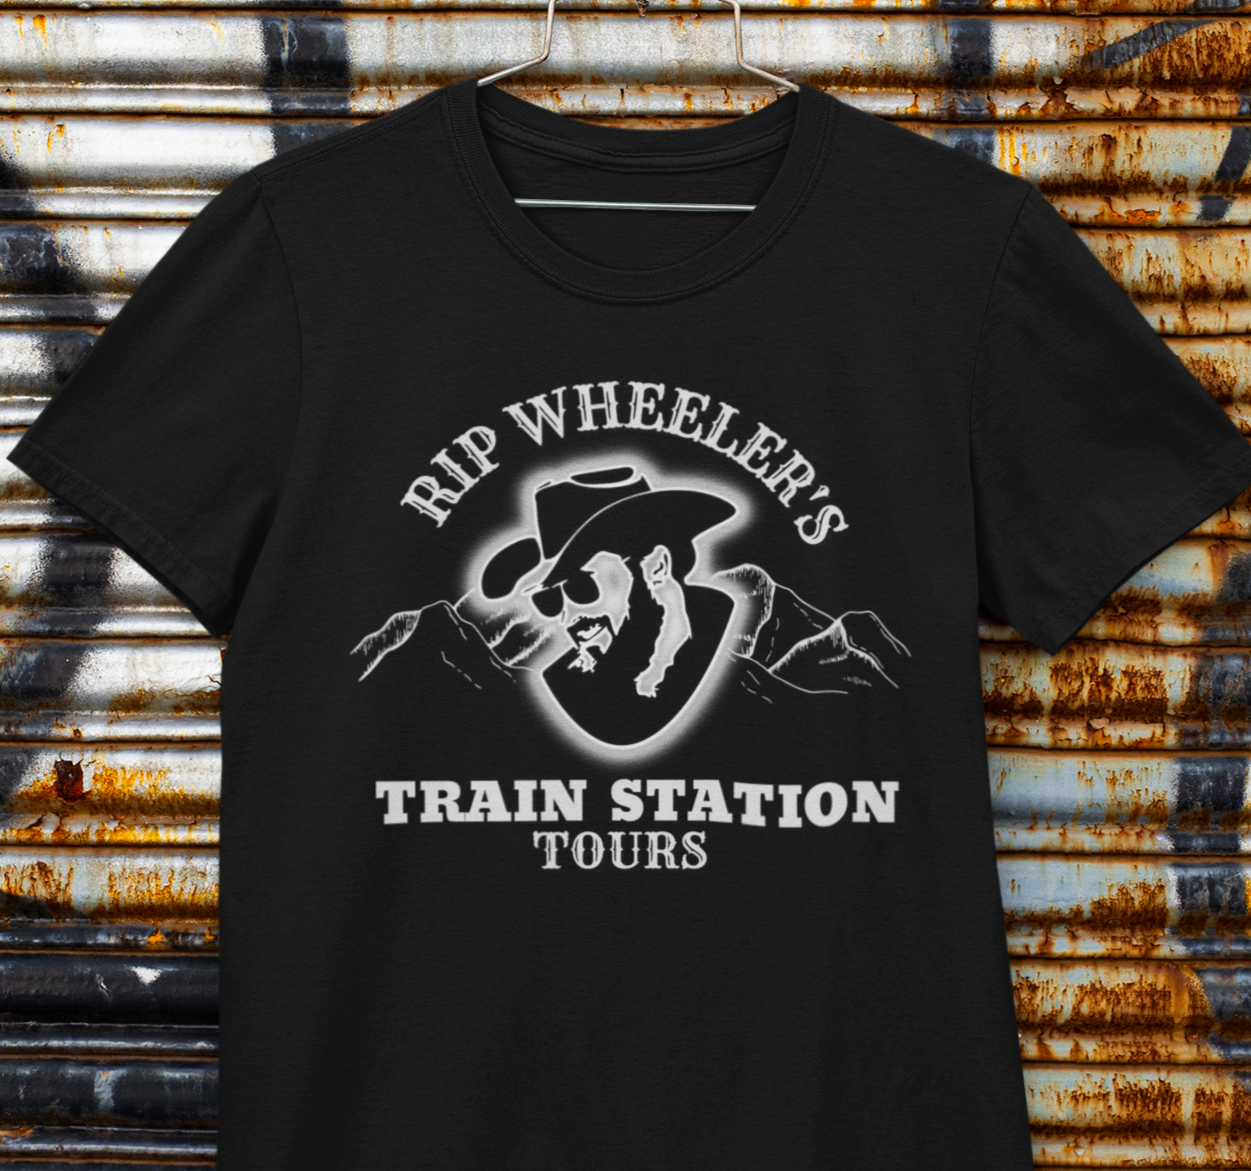 Rip Wheeler's Train Station T-Shirt